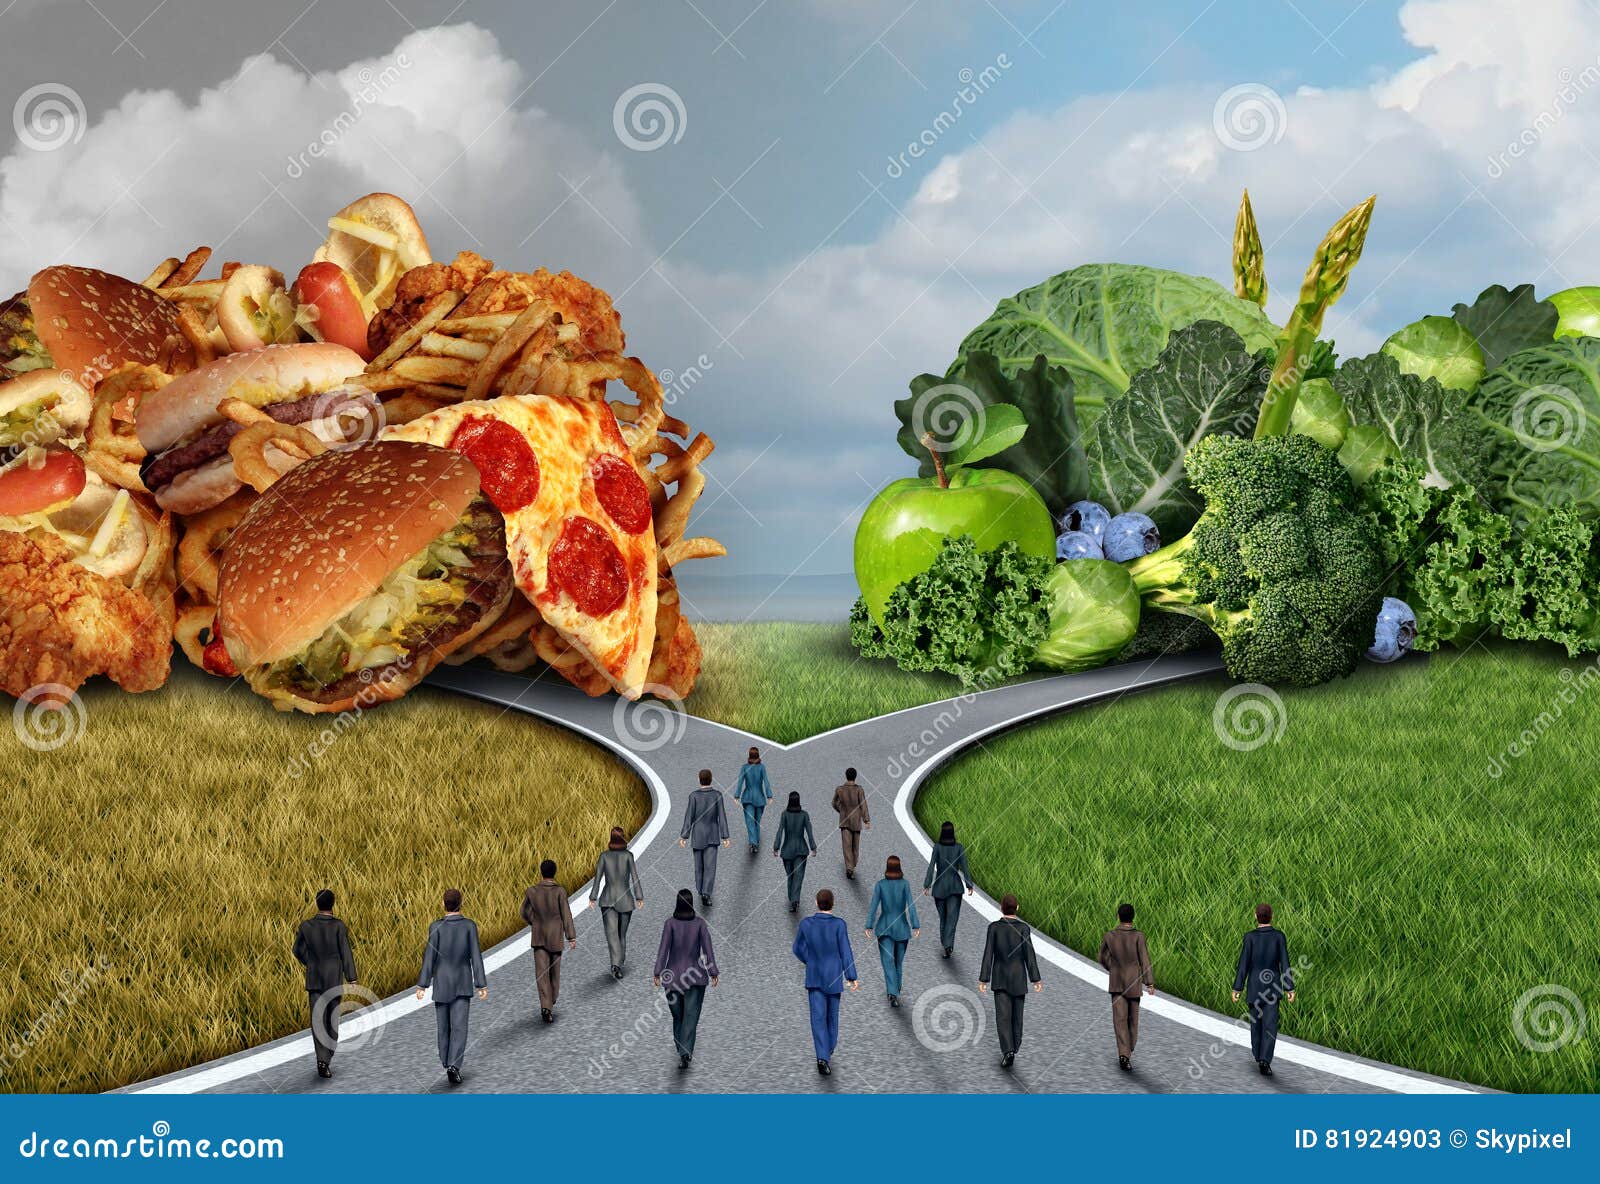 society food diet choice